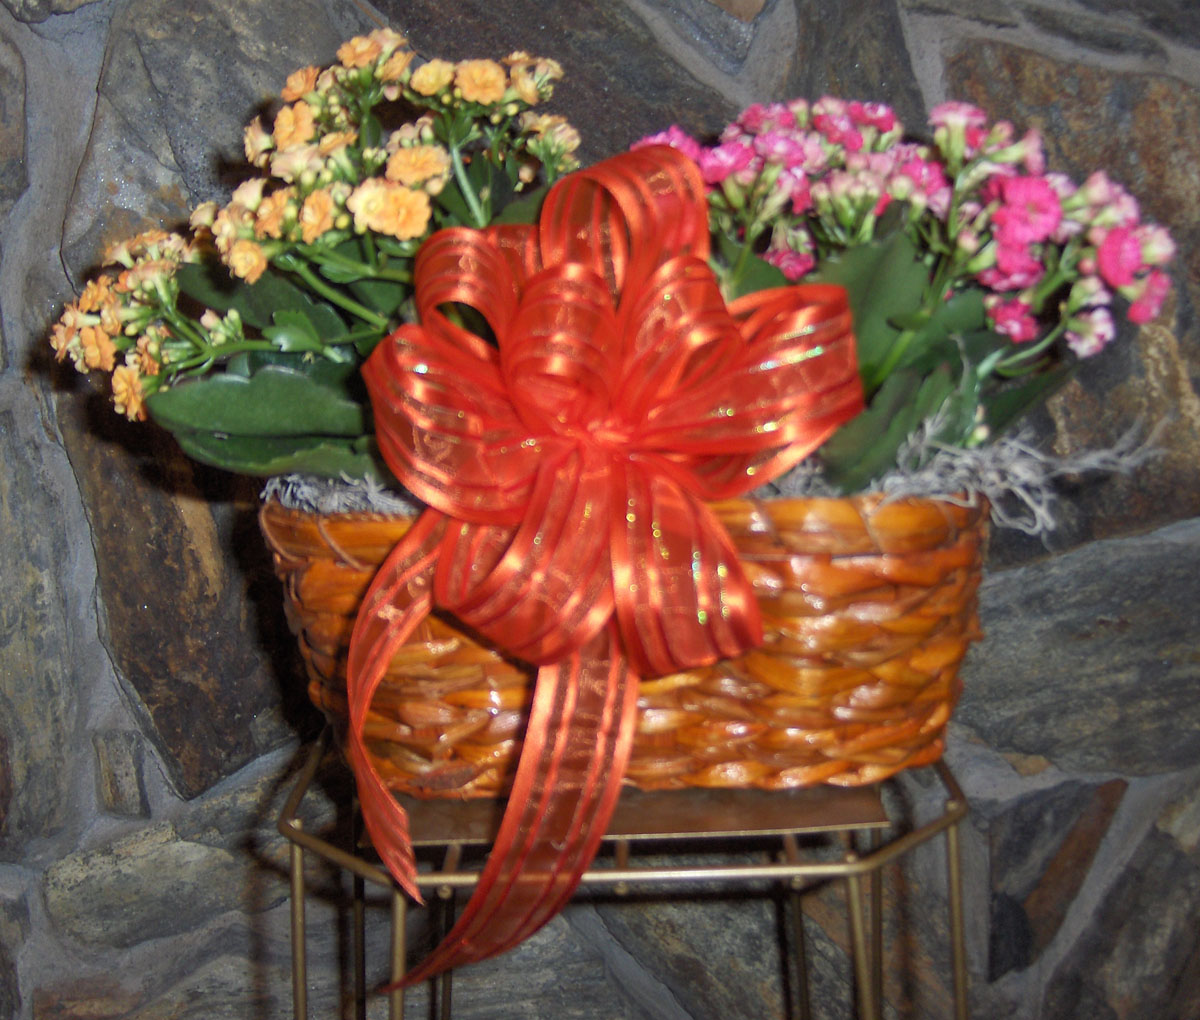 Flowers from Troy, Gayle, Allan & KayDee Roth